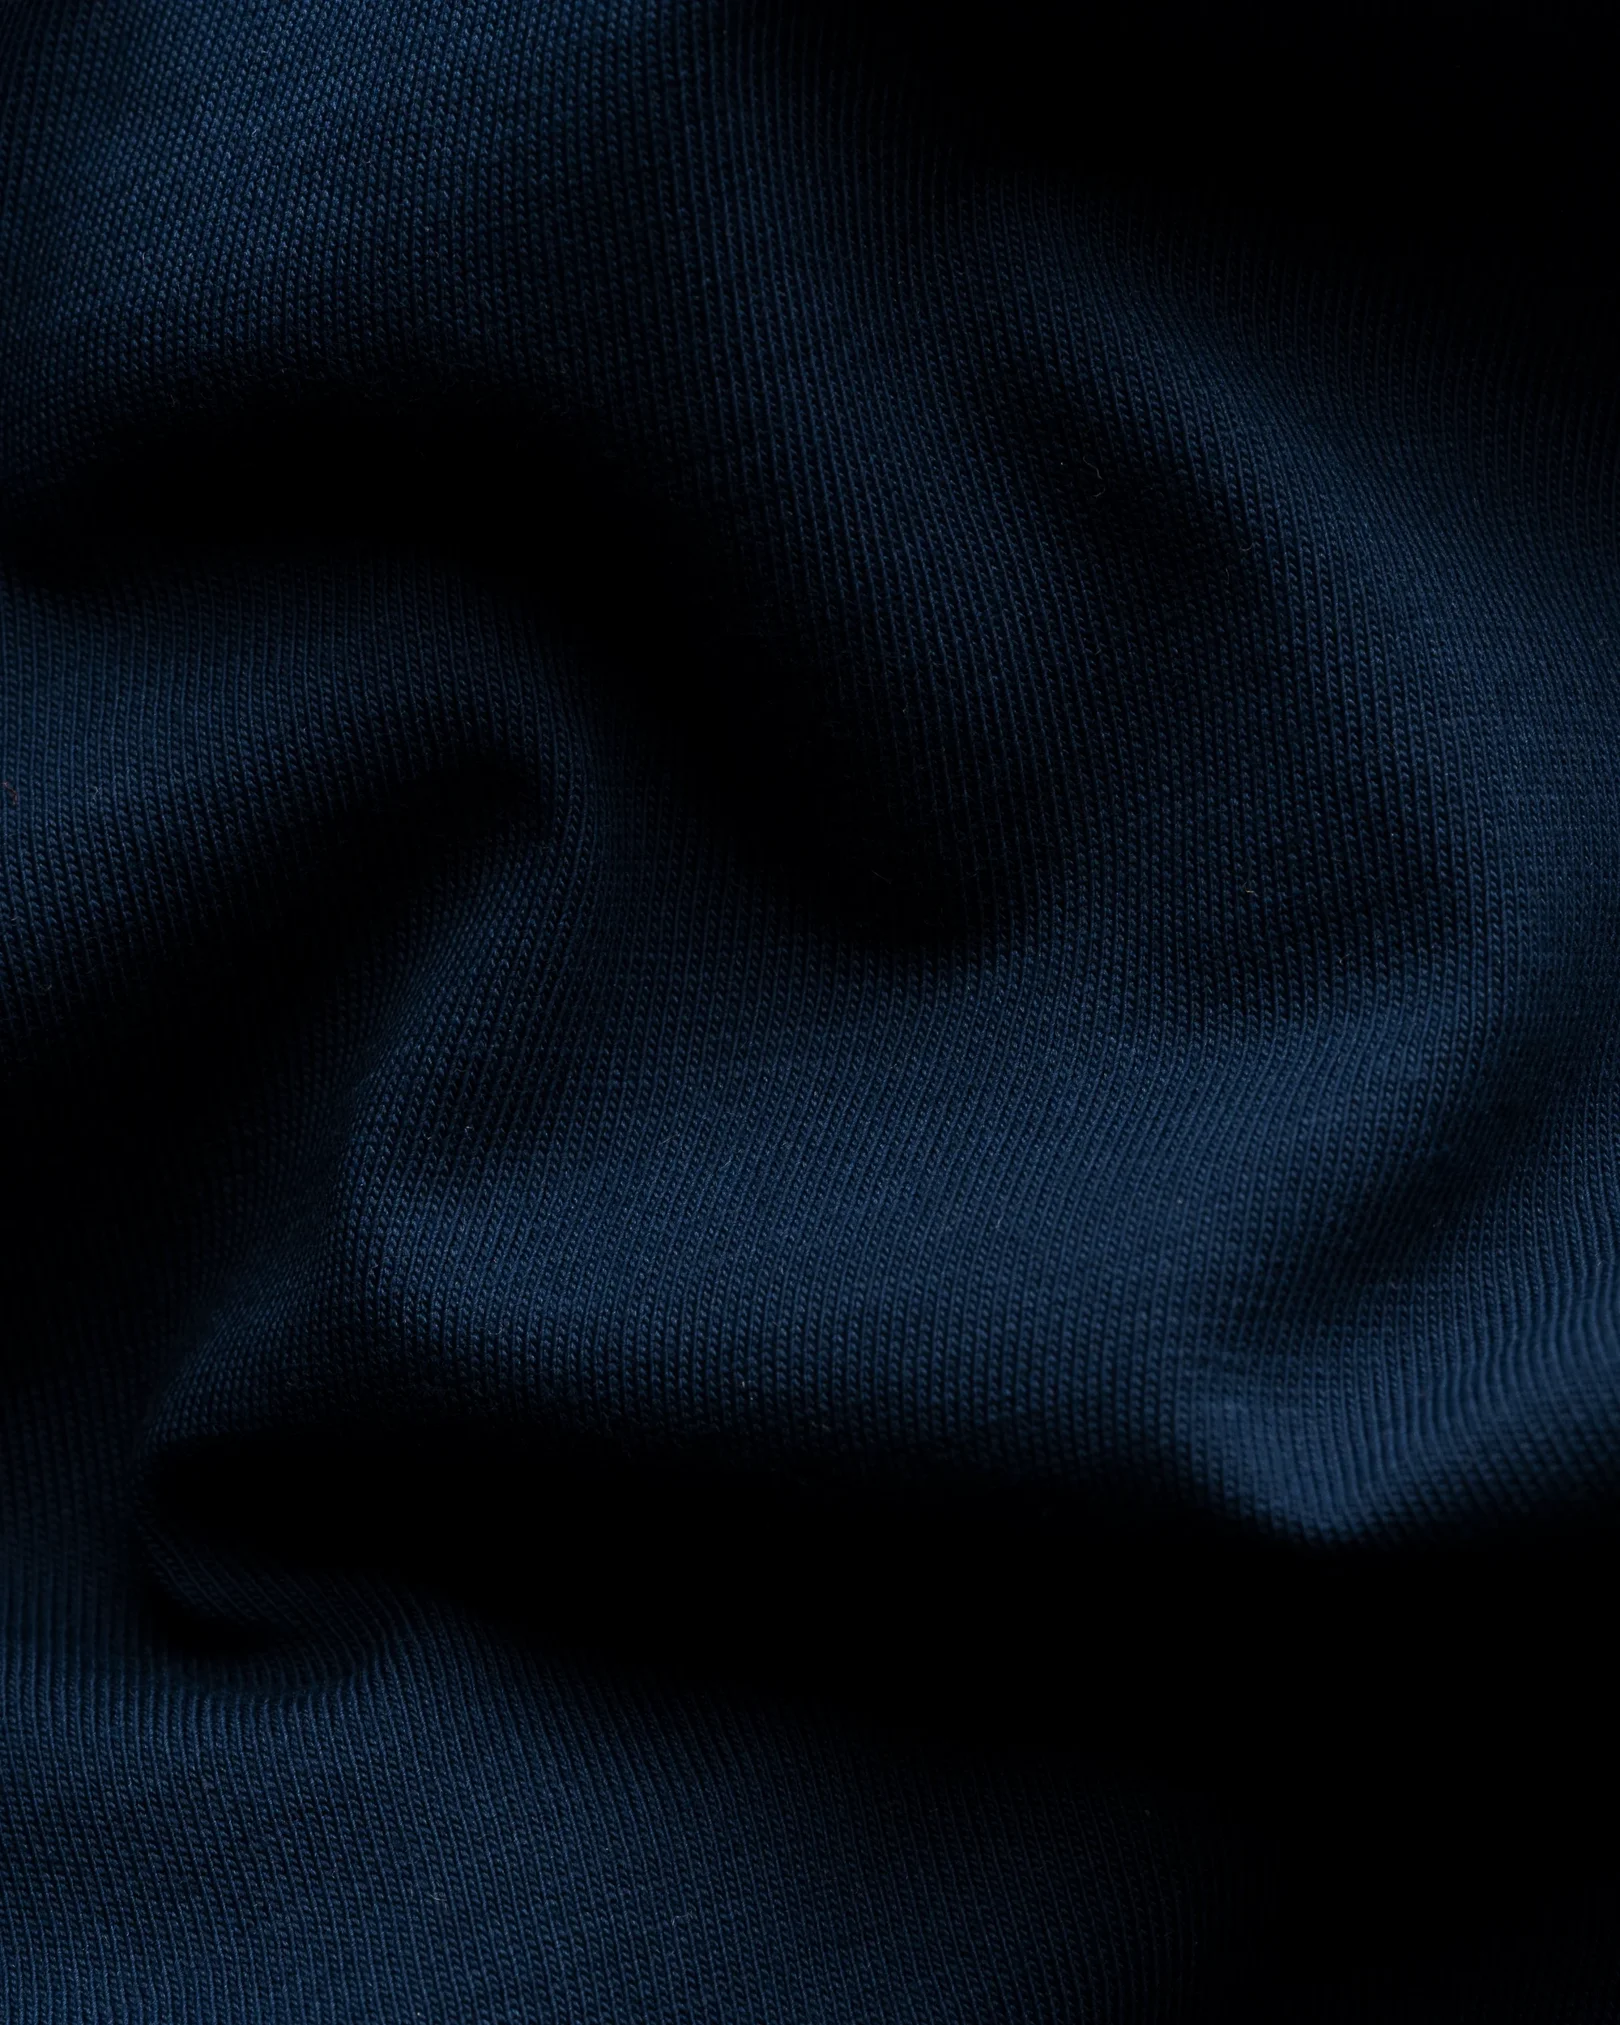 Eton - T-shirt bleu marine en coton Supima